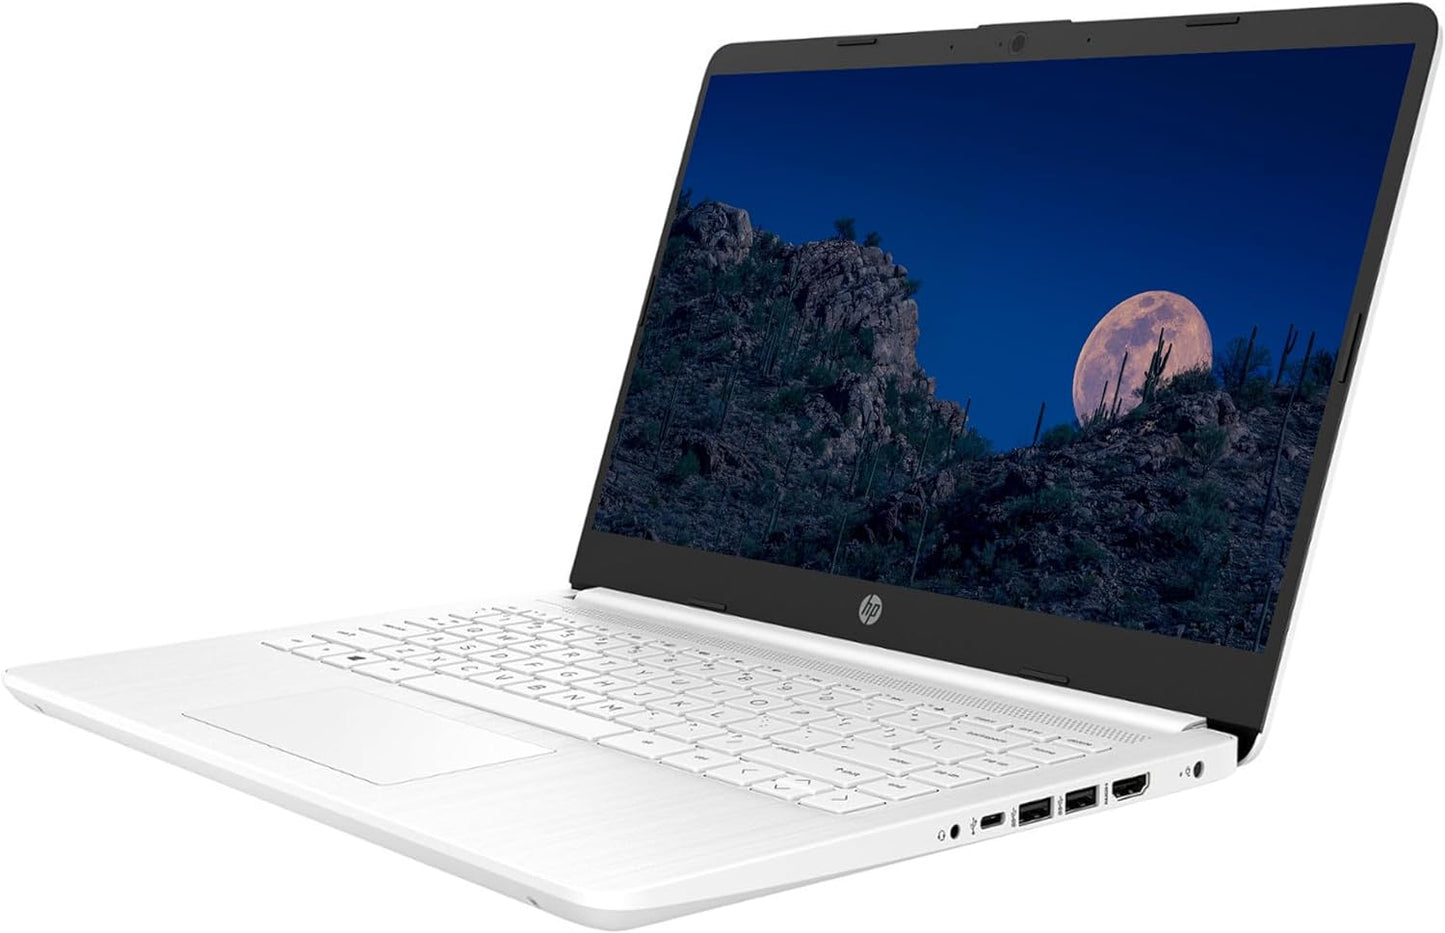 2023 HP 14'' HD Laptop: Celeron N4120, 4GB RAM, 64GB SSD, Windows 11